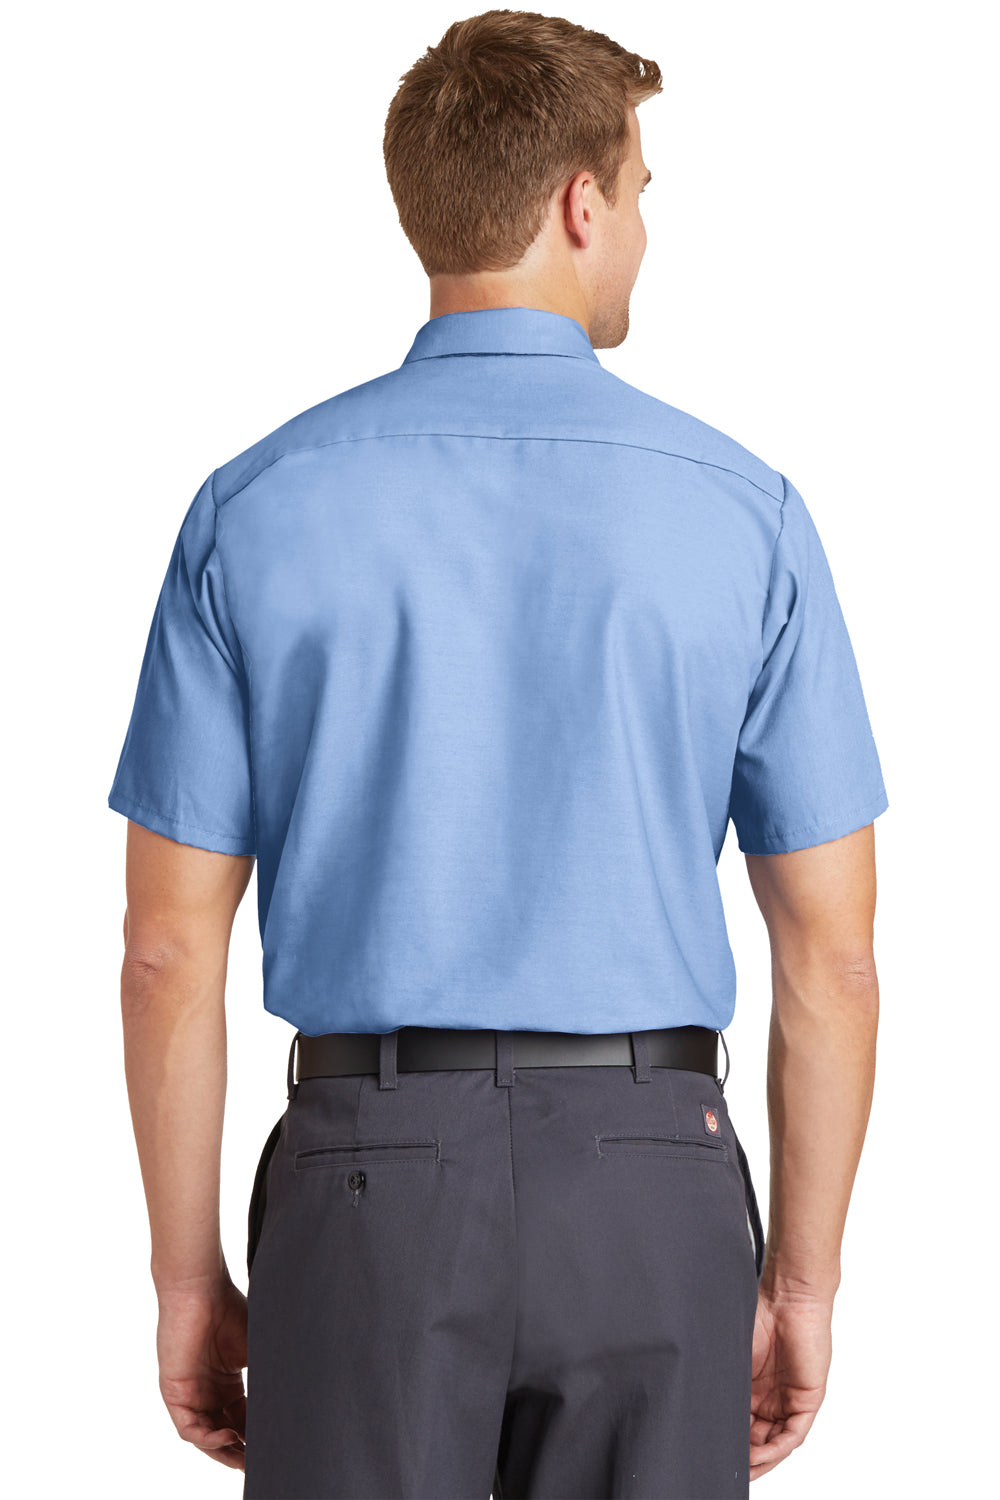 Red Kap SP24 Mens Industrial Moisture Wicking Short Sleeve Button Down Shirt w/ Double Pockets Light Blue Back